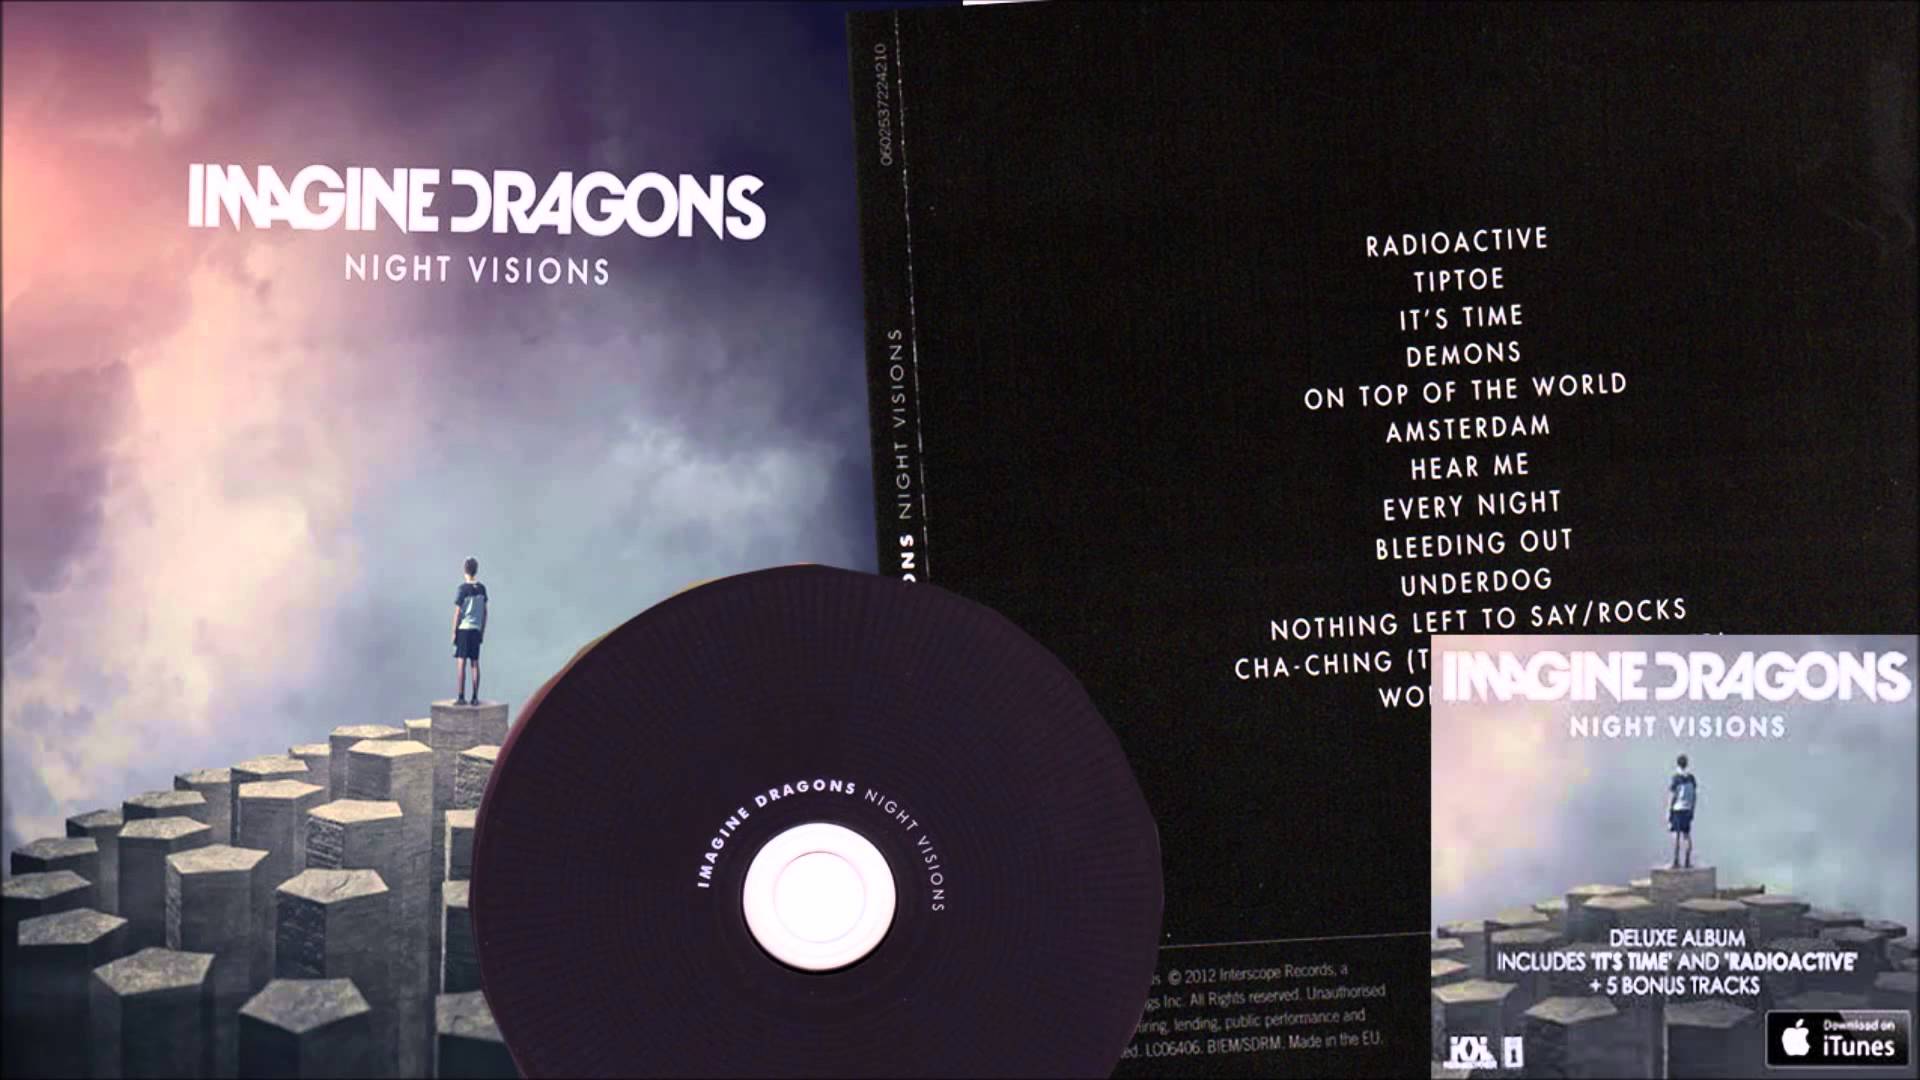 Lonely imagine. Imagine Dragons альбом Night Visions. Обложка альбома Night Visions imagine Dragons. Имагине Драгонс Night Vision. Night Visions (2012—2014).